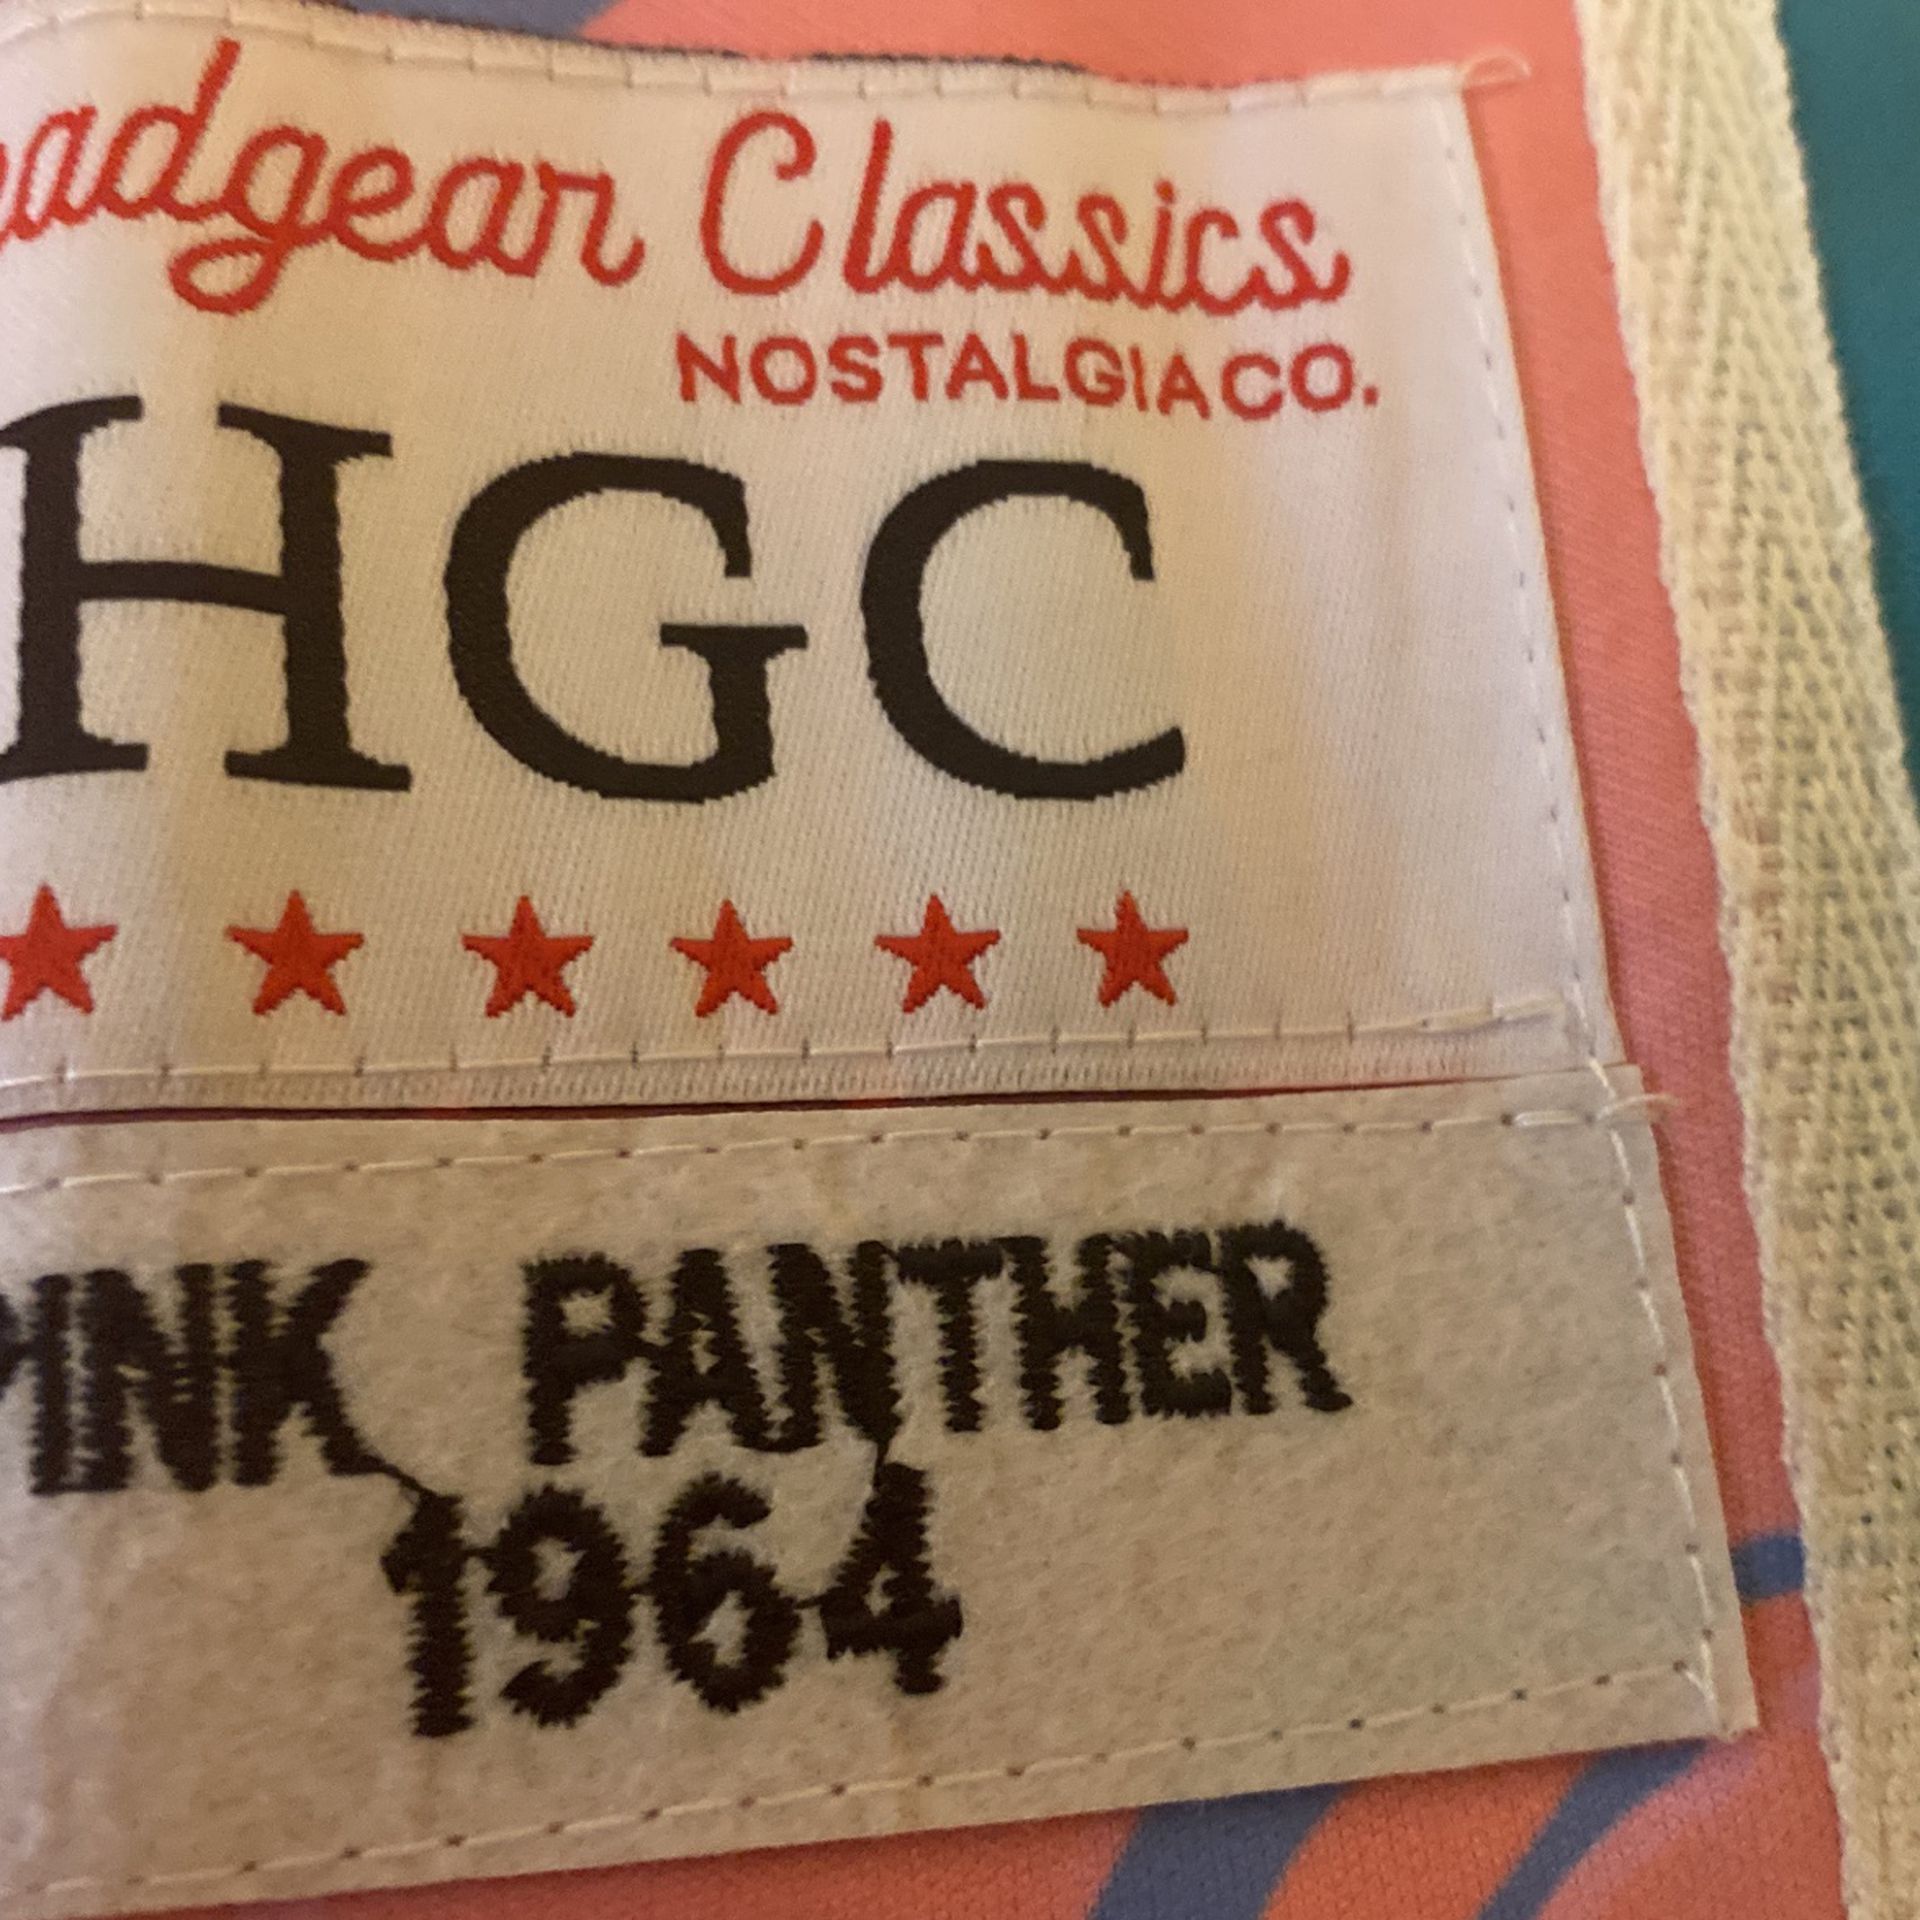 pink panther miami heat jersey